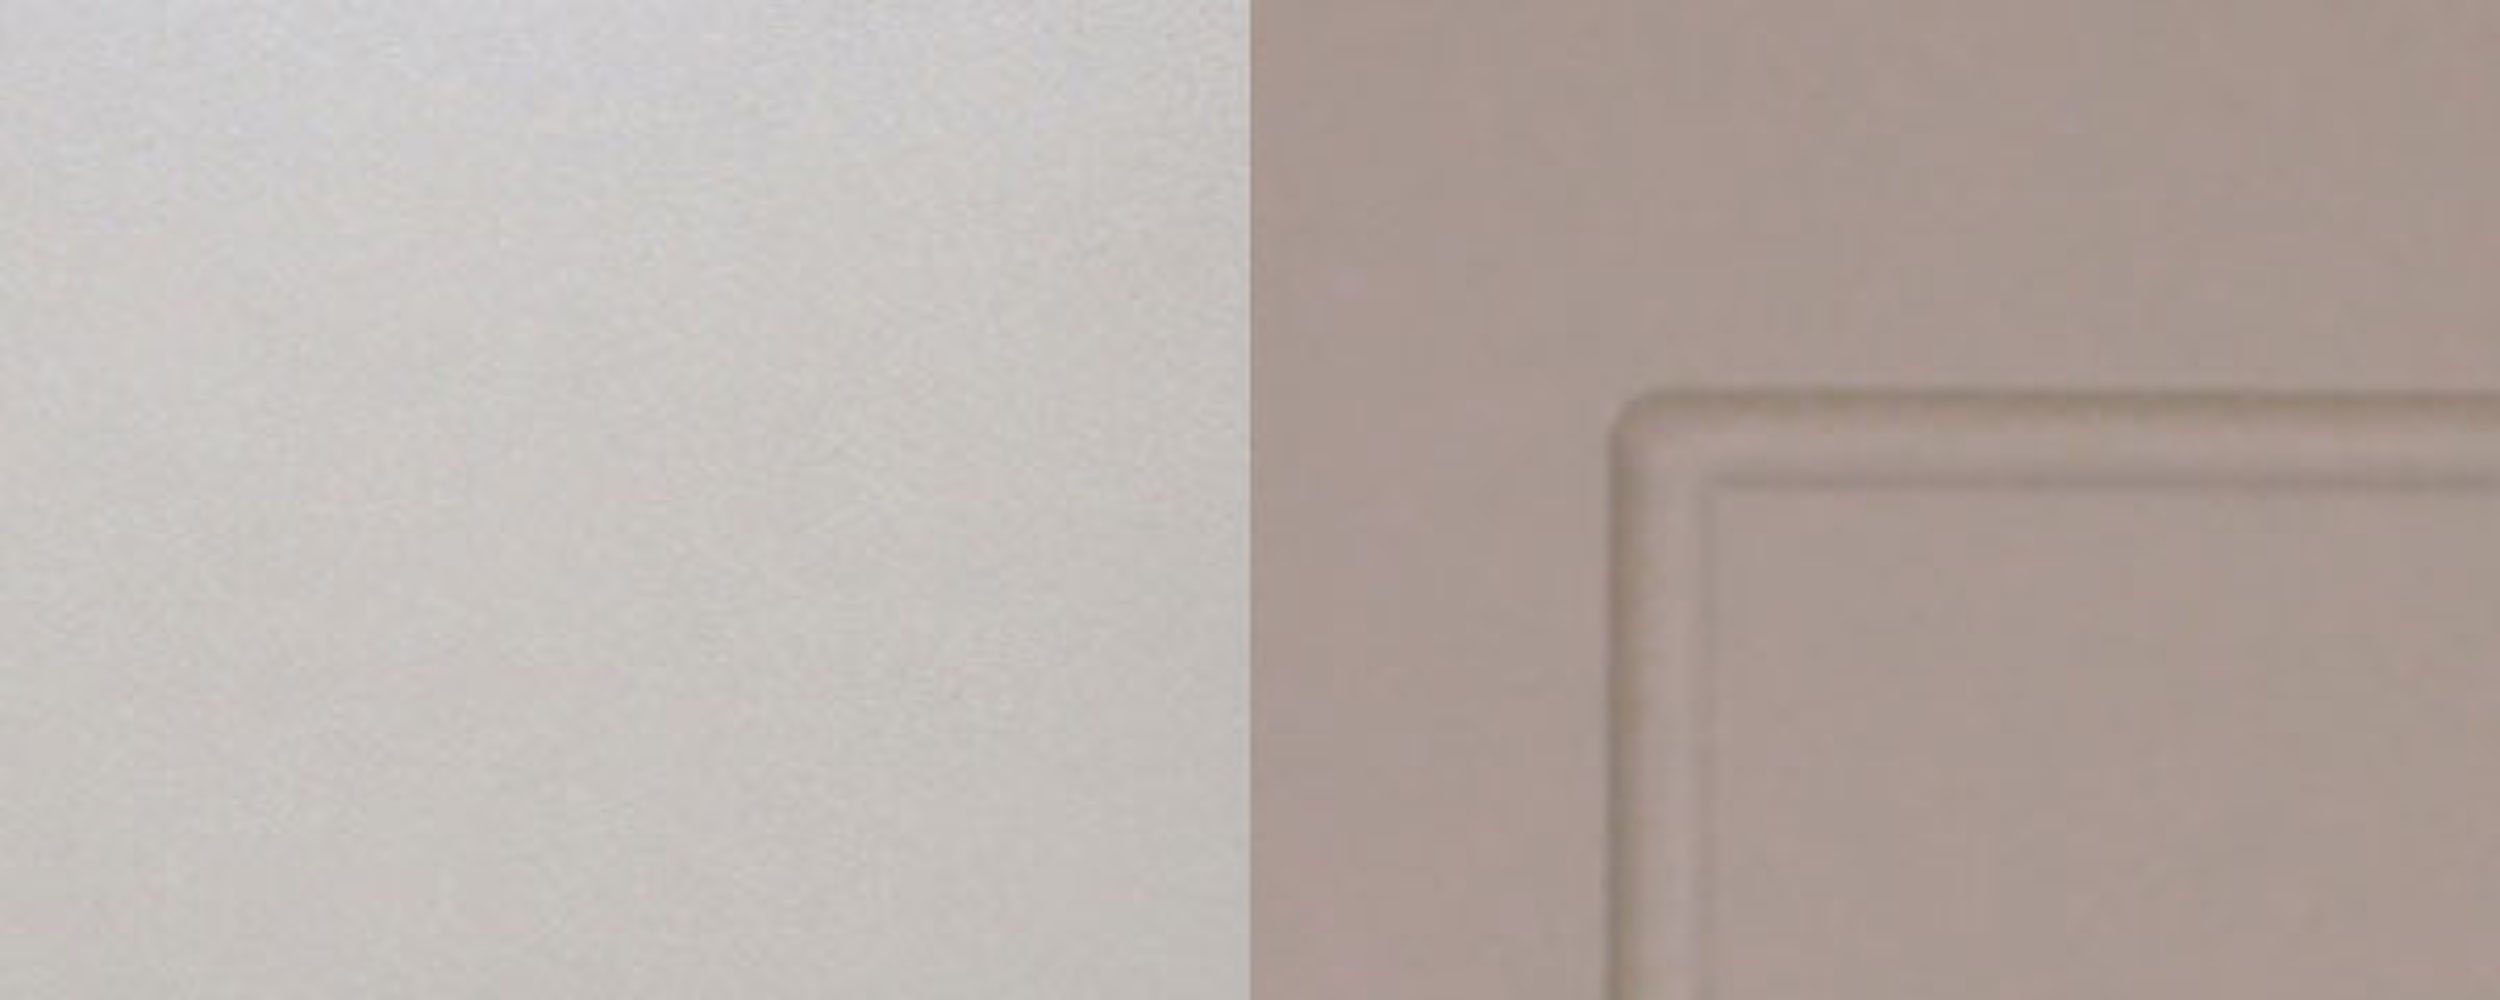 matt Front-, wählbar 1-türig beige Feldmann-Wohnen Kvantum 2 15cm Metallkörben & Unterschrank (Kvantum) Ausführung Korpusfarbe